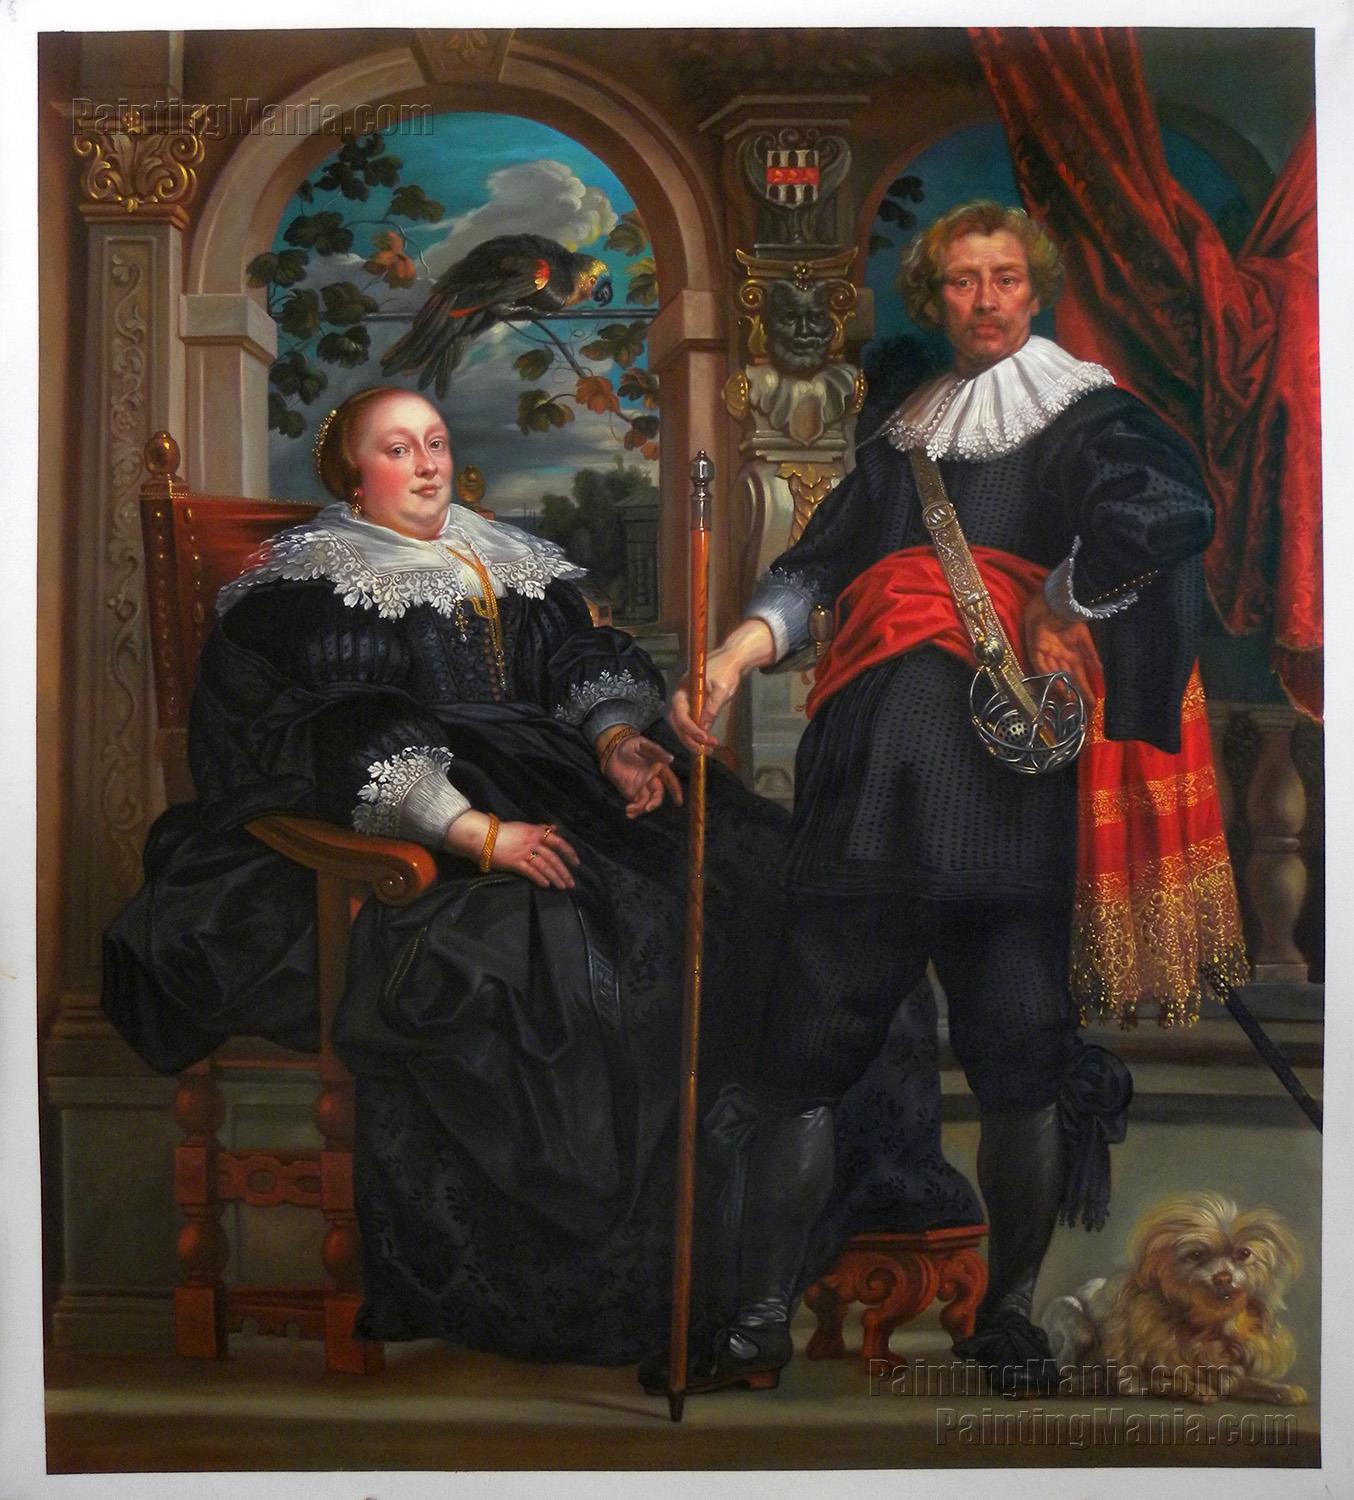 Portrait of Govaert van Surpele and his Wife by Jacob Jordaens